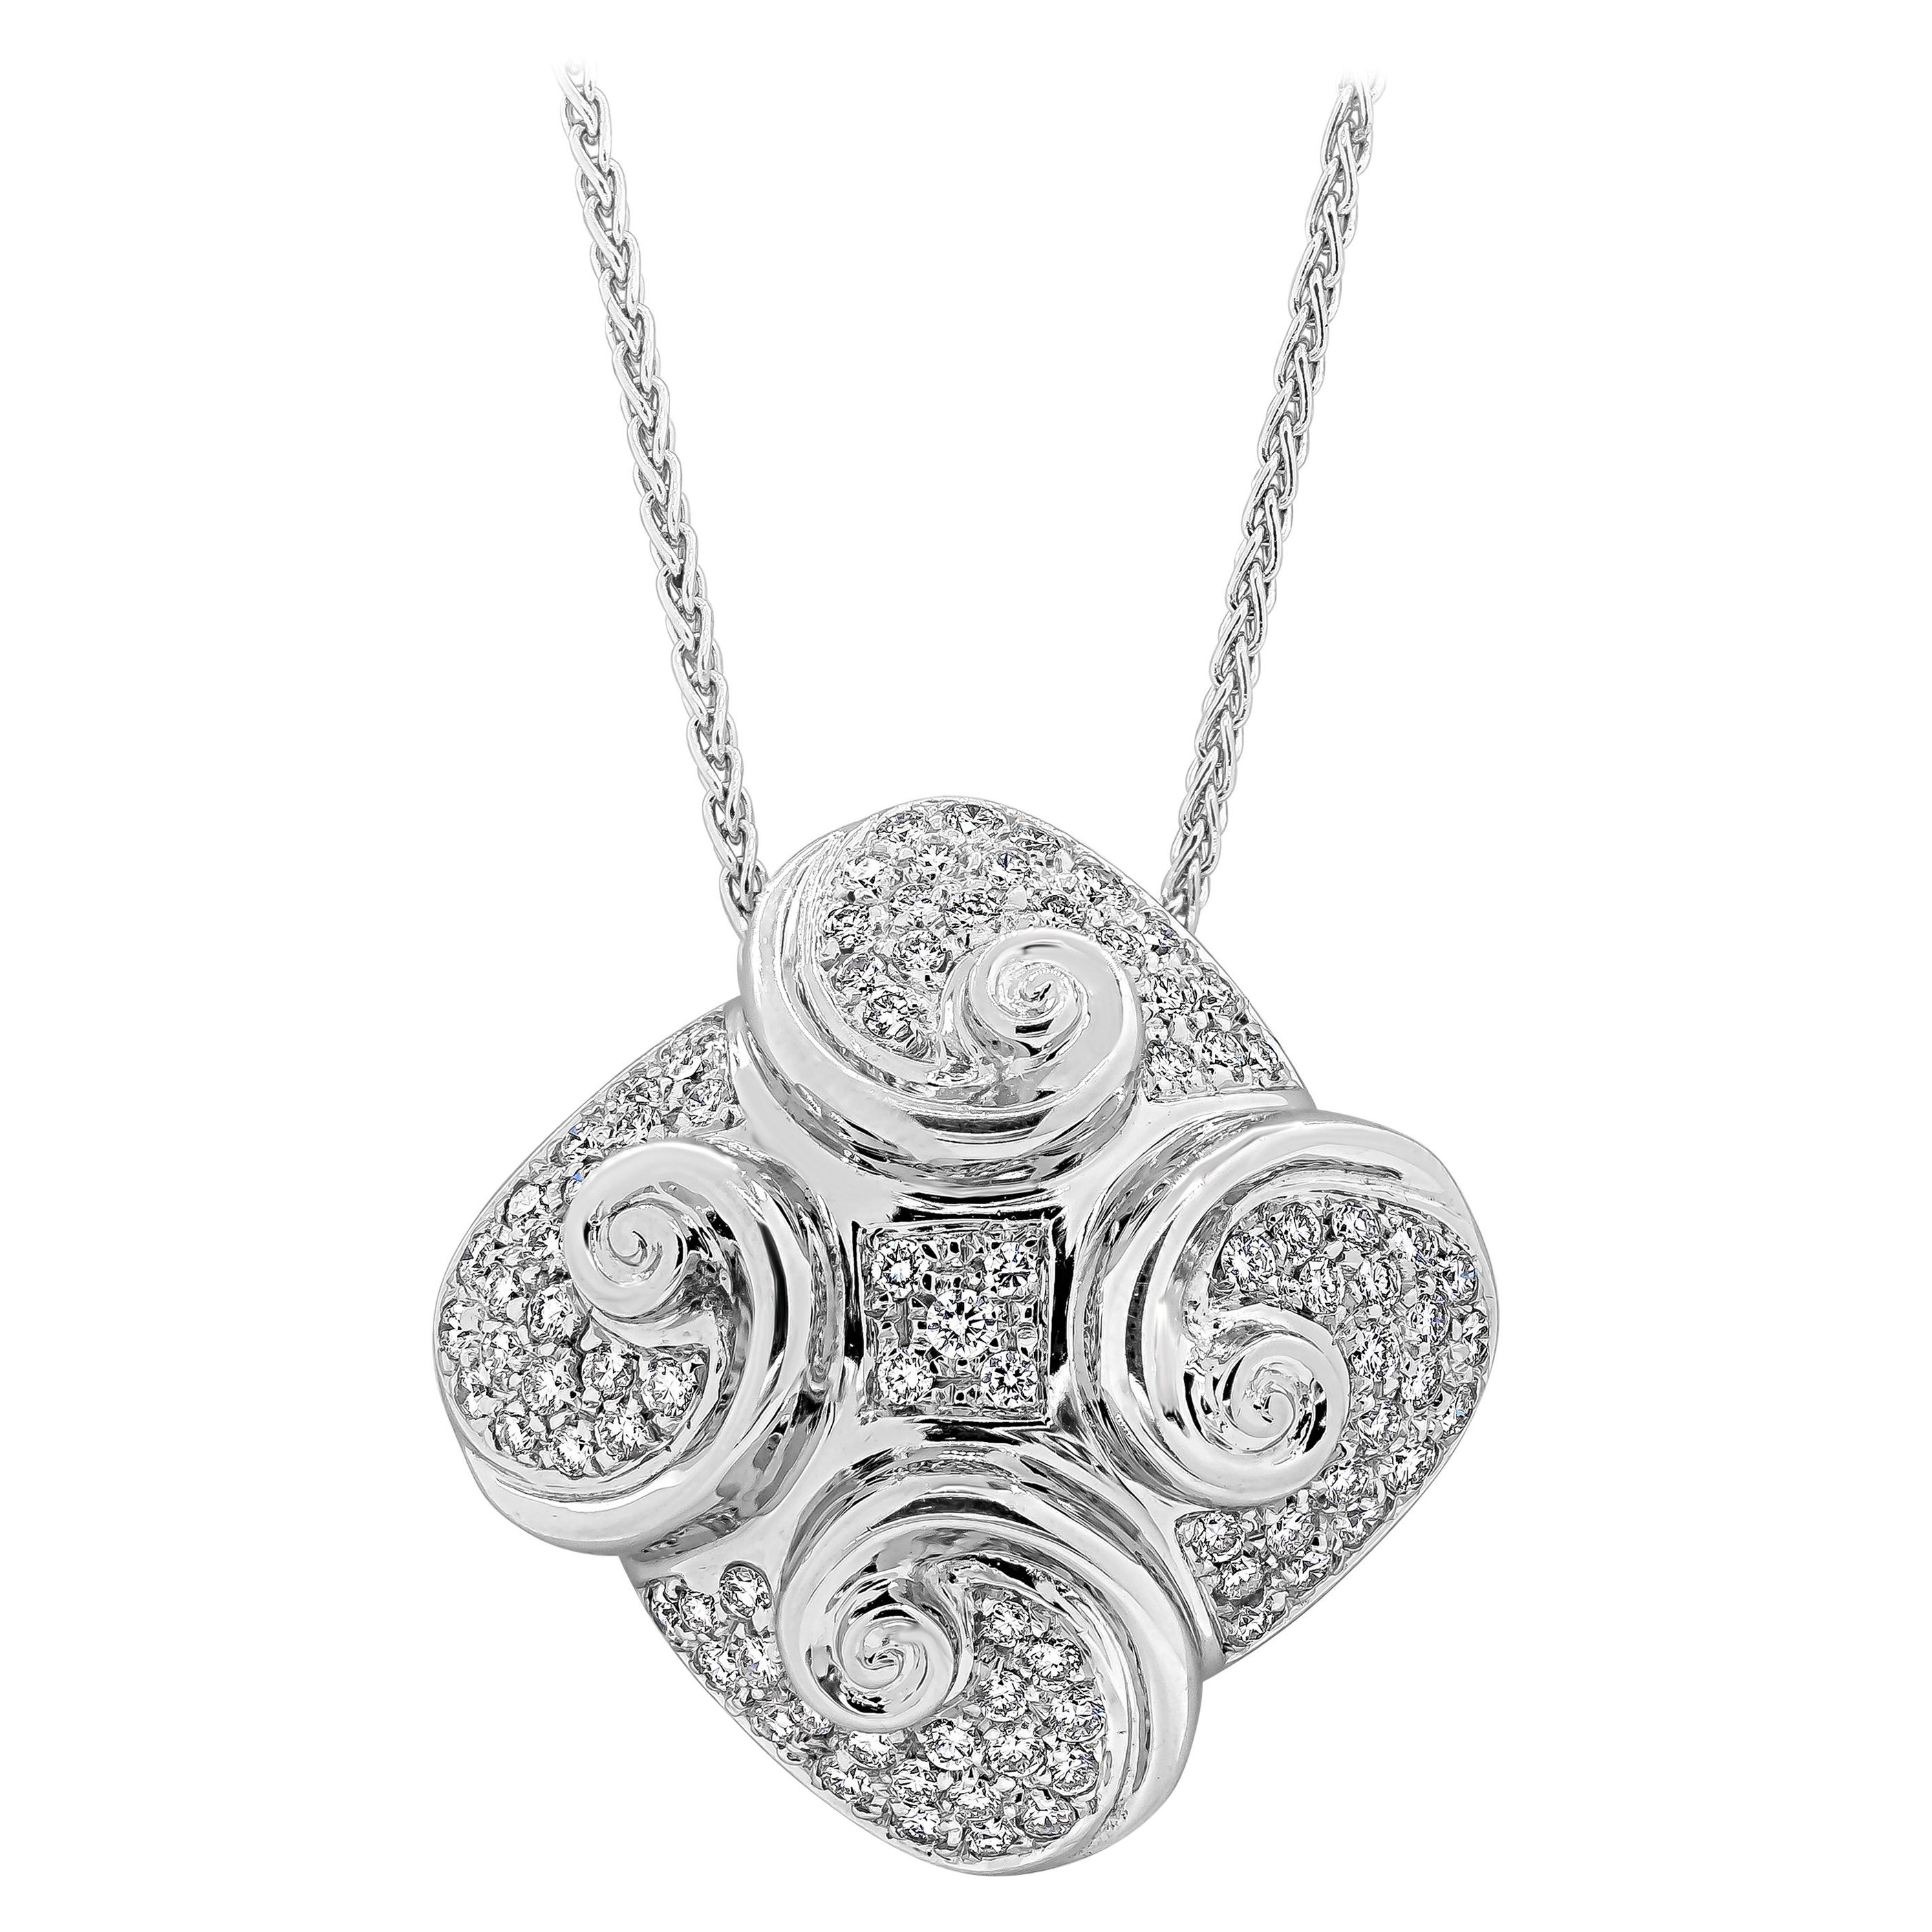 Roman Malakov 1.34 Carat Diamond Swirl Fashion Pendant Necklace